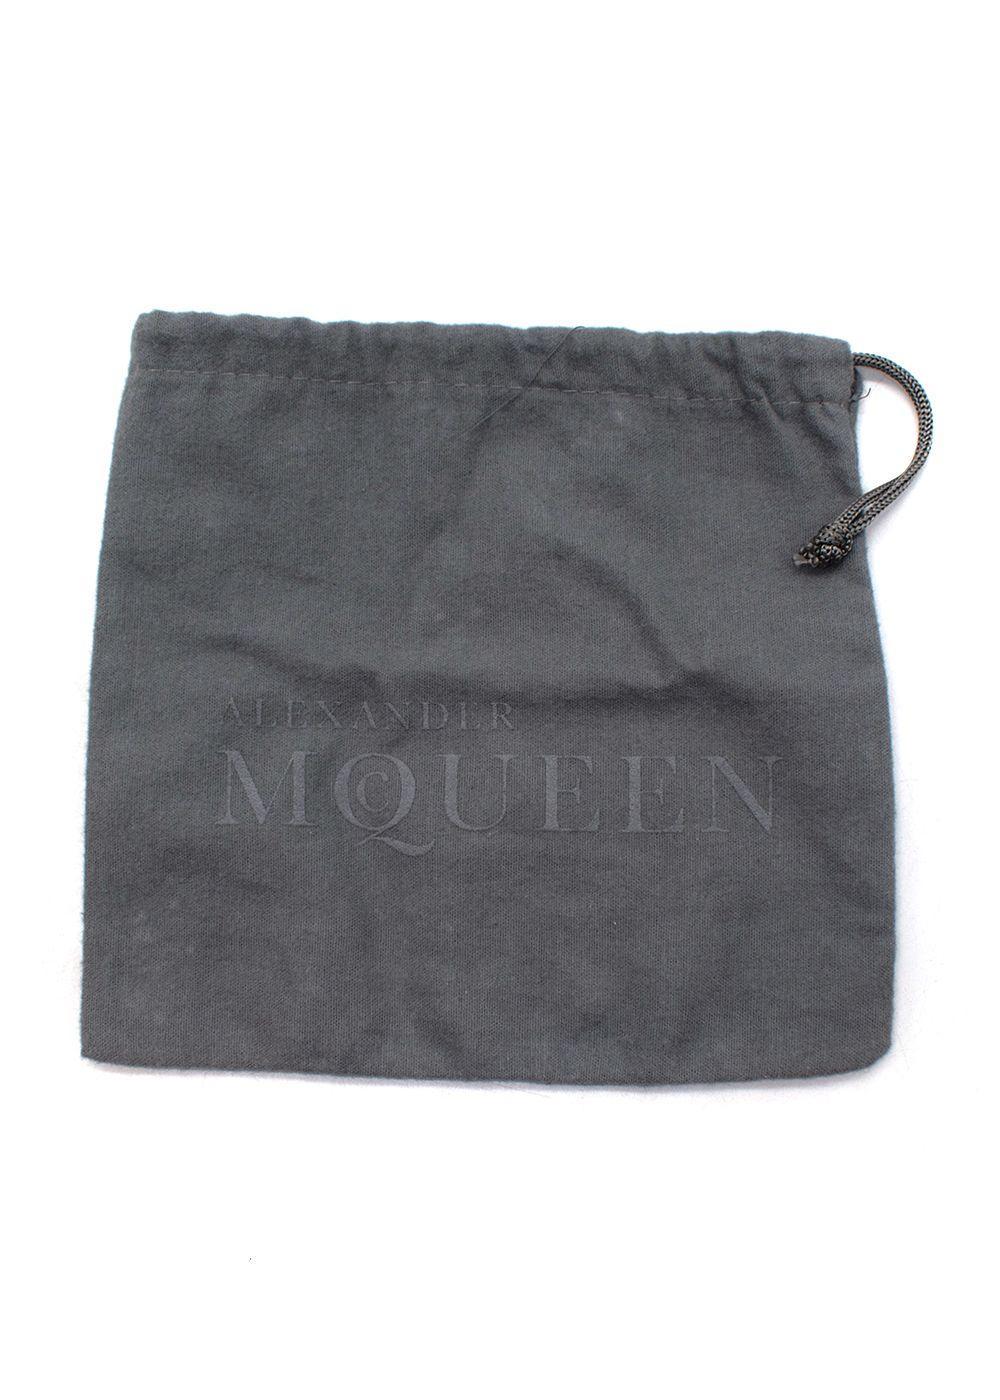 Alexander McQueen Pearl Embellished Clutch Bag 8